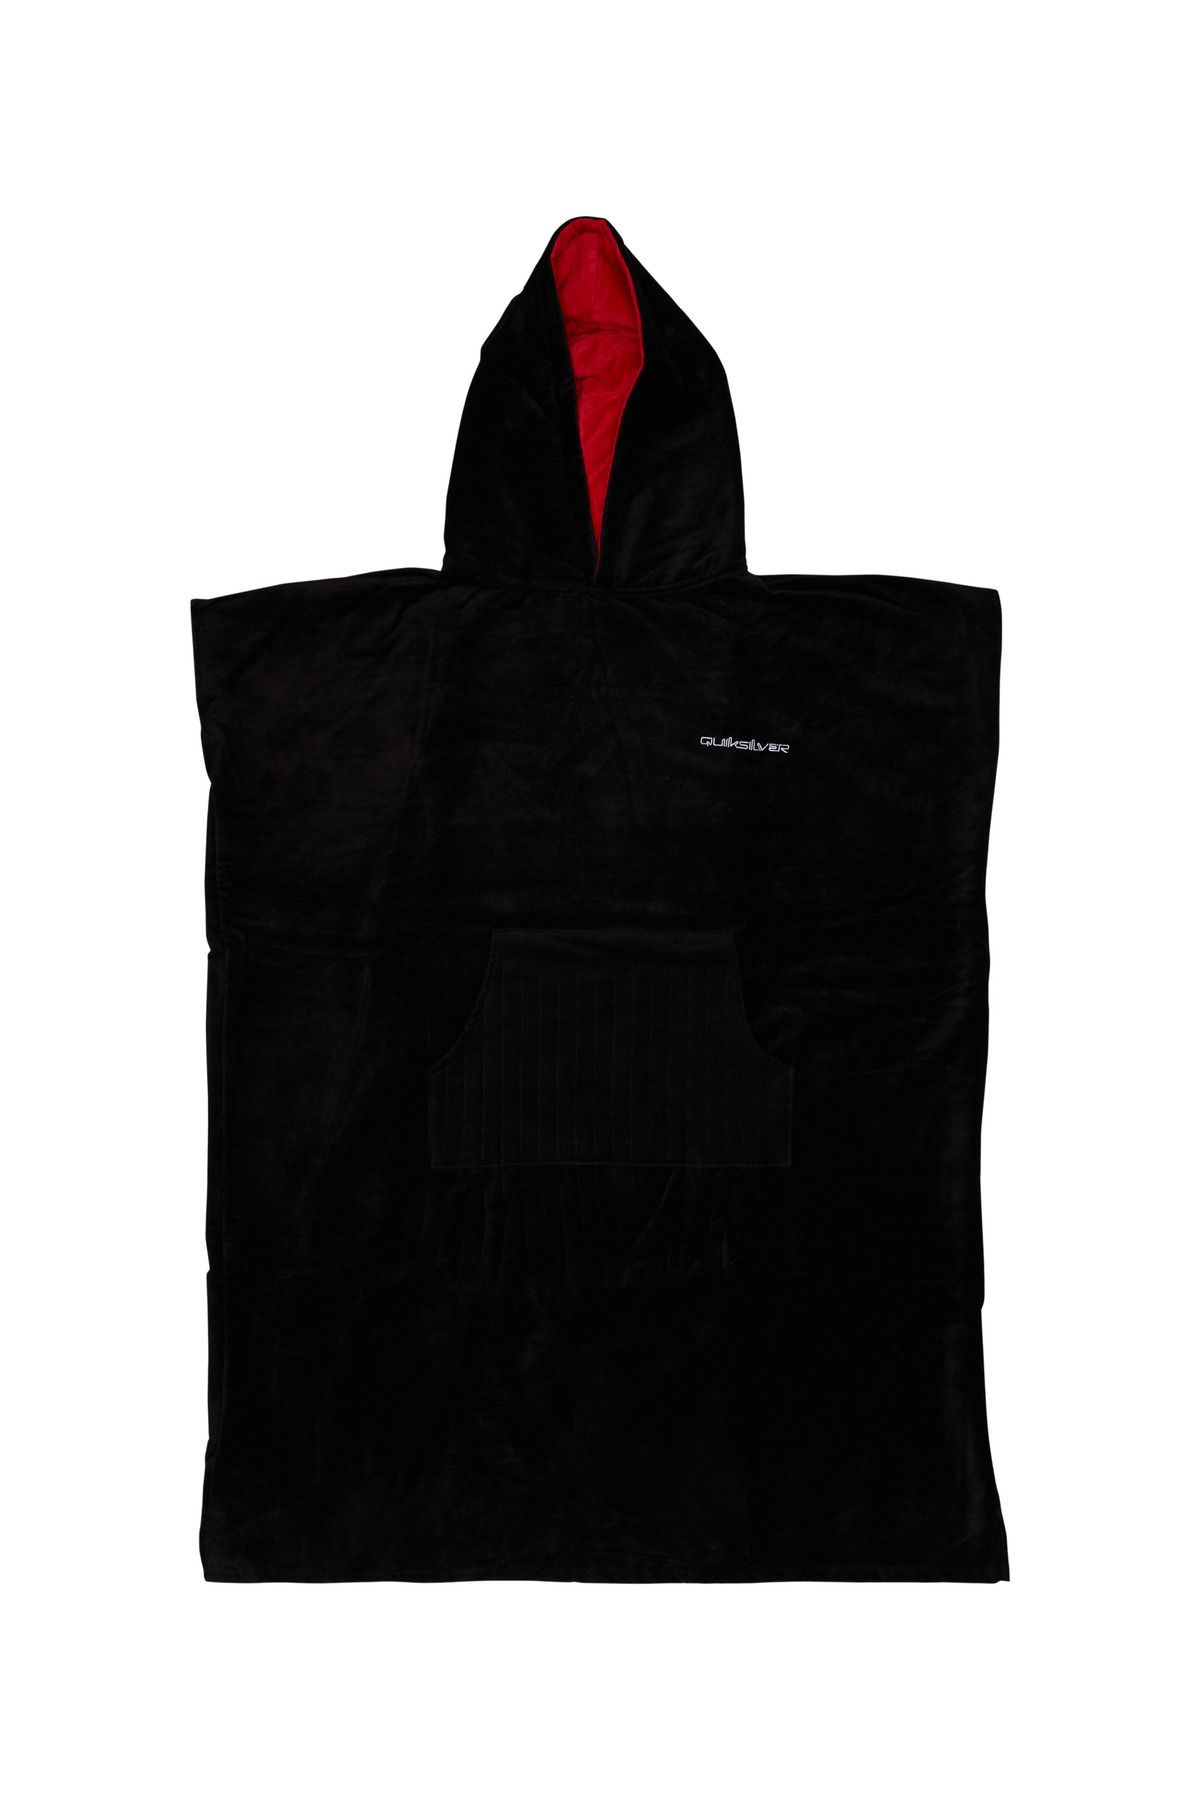 Quiksilver Hoody Towel Kapüşonlu Havlu AQYAA03233-18387 Black/Jet Black